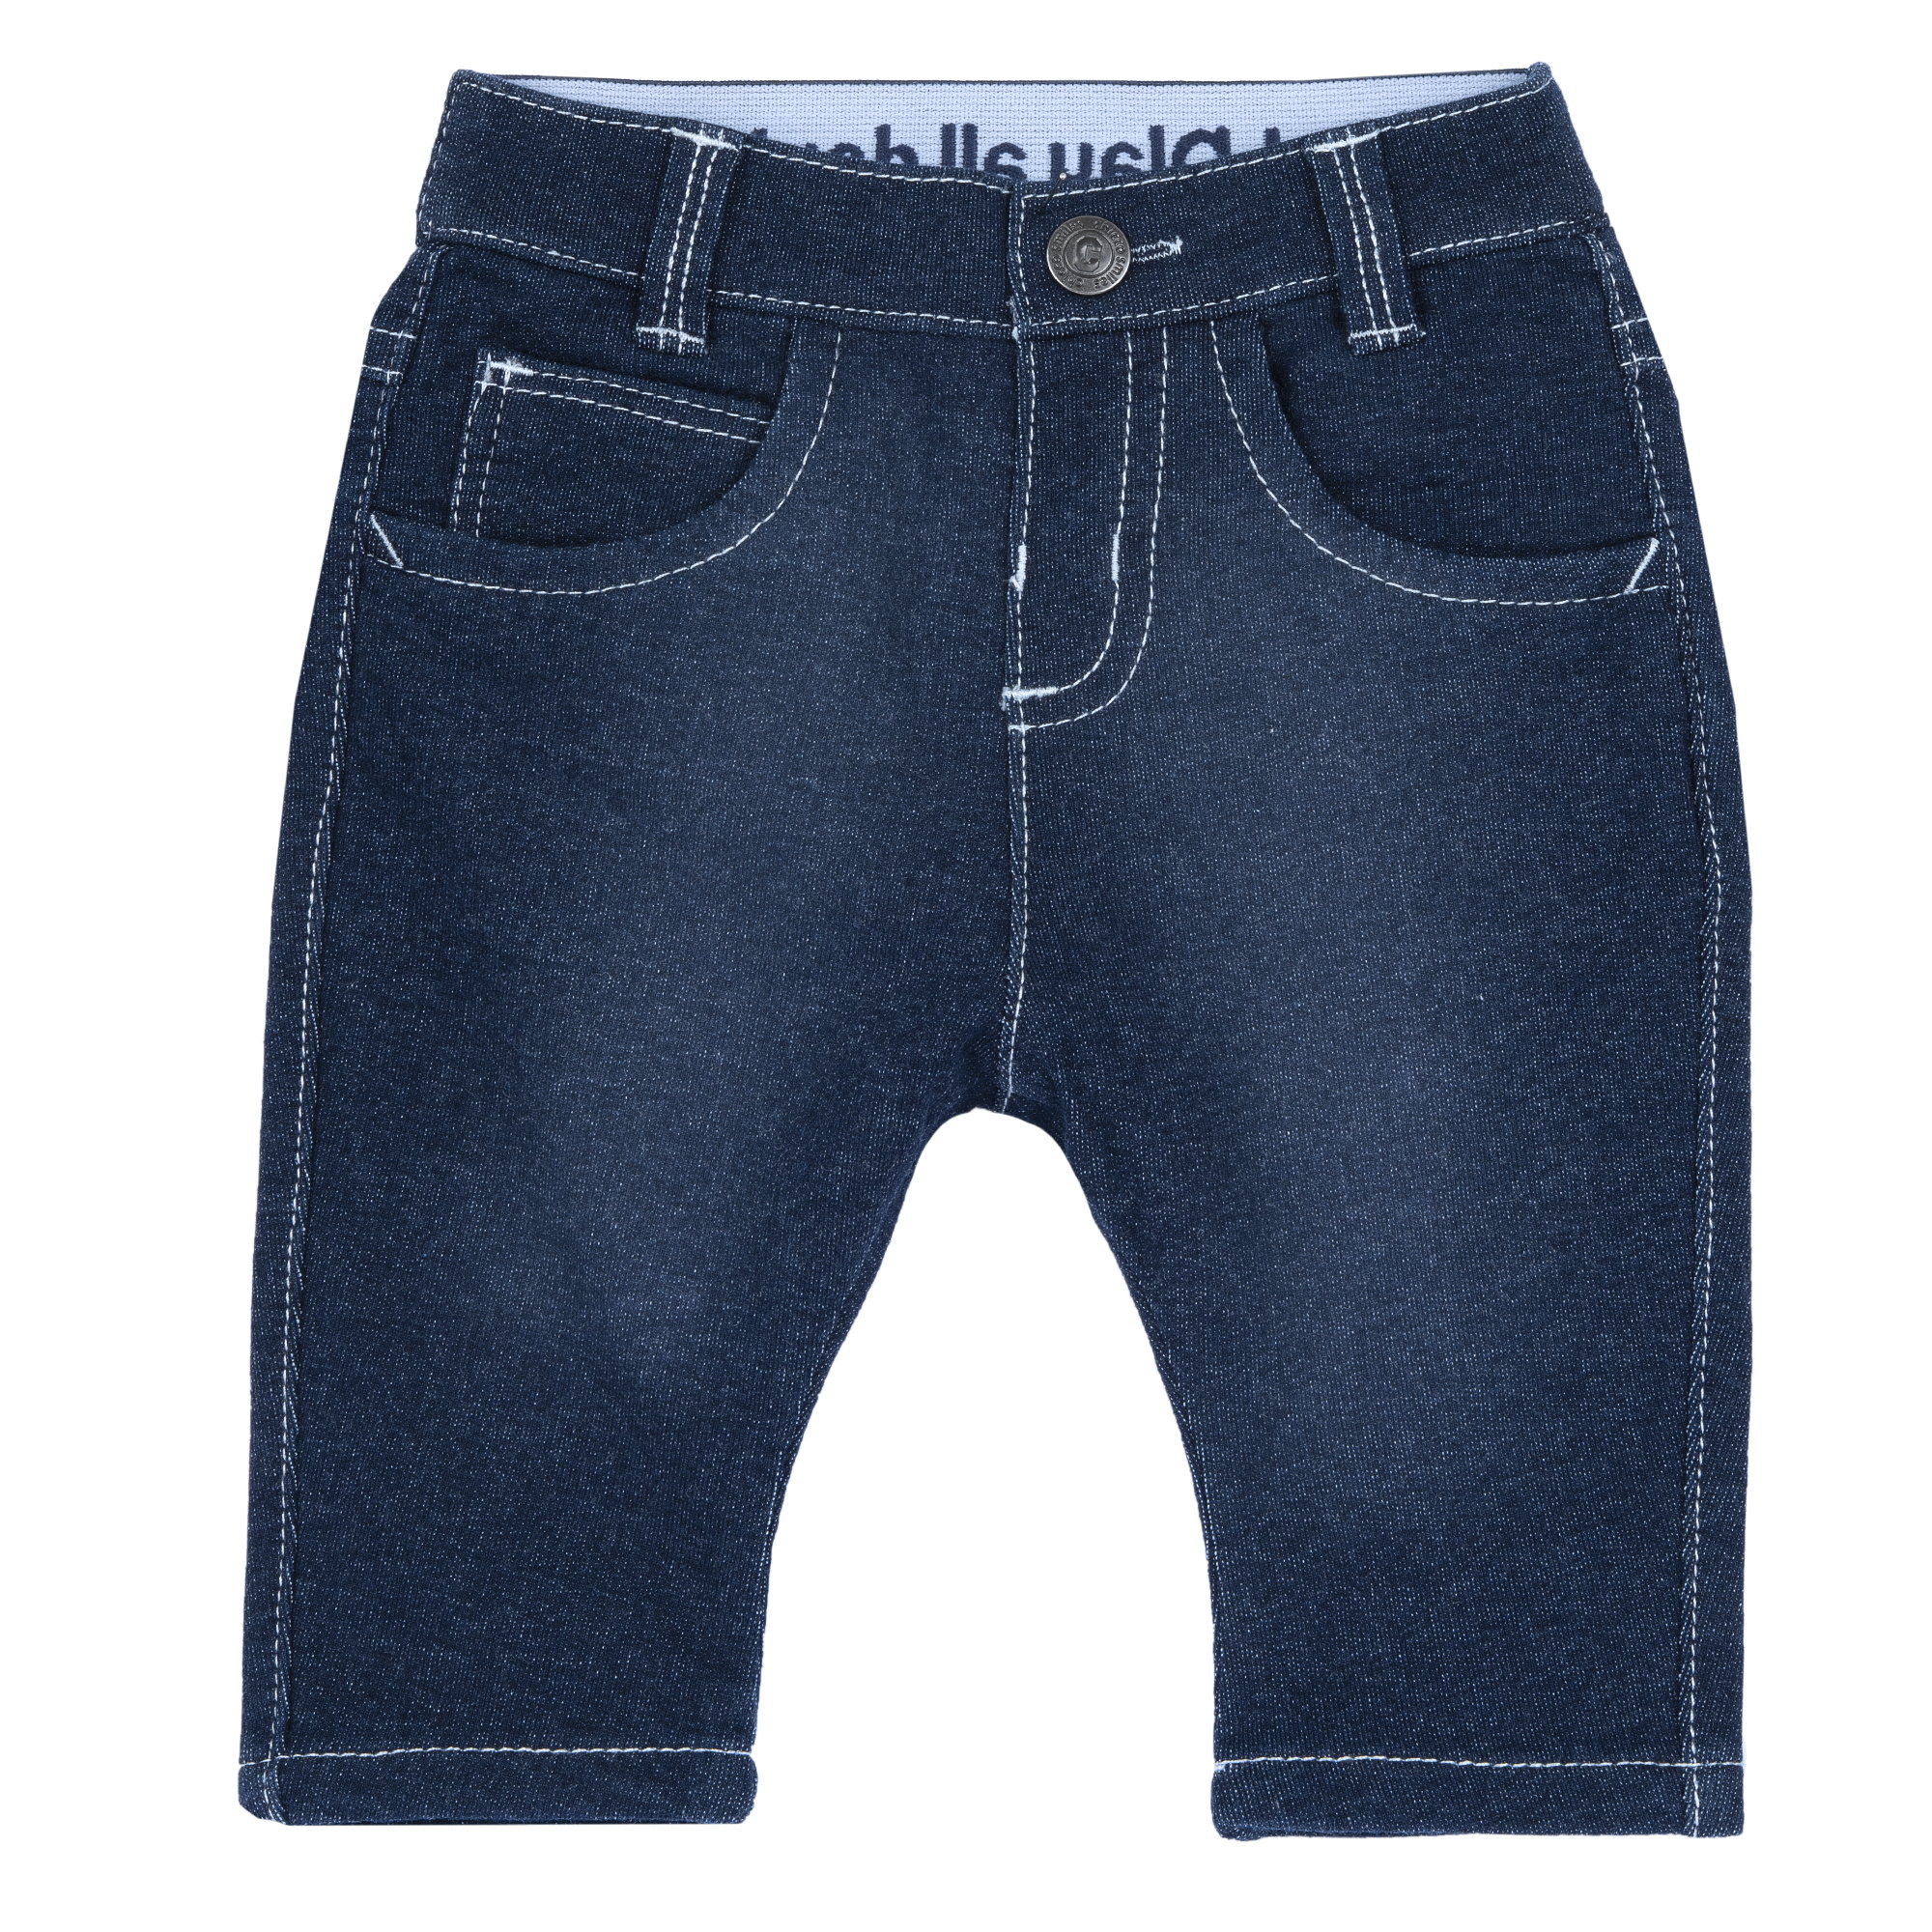 Pantaloni Copii Chicco Din Denim Stretch, Albastru Inchis, 24203-66mfco